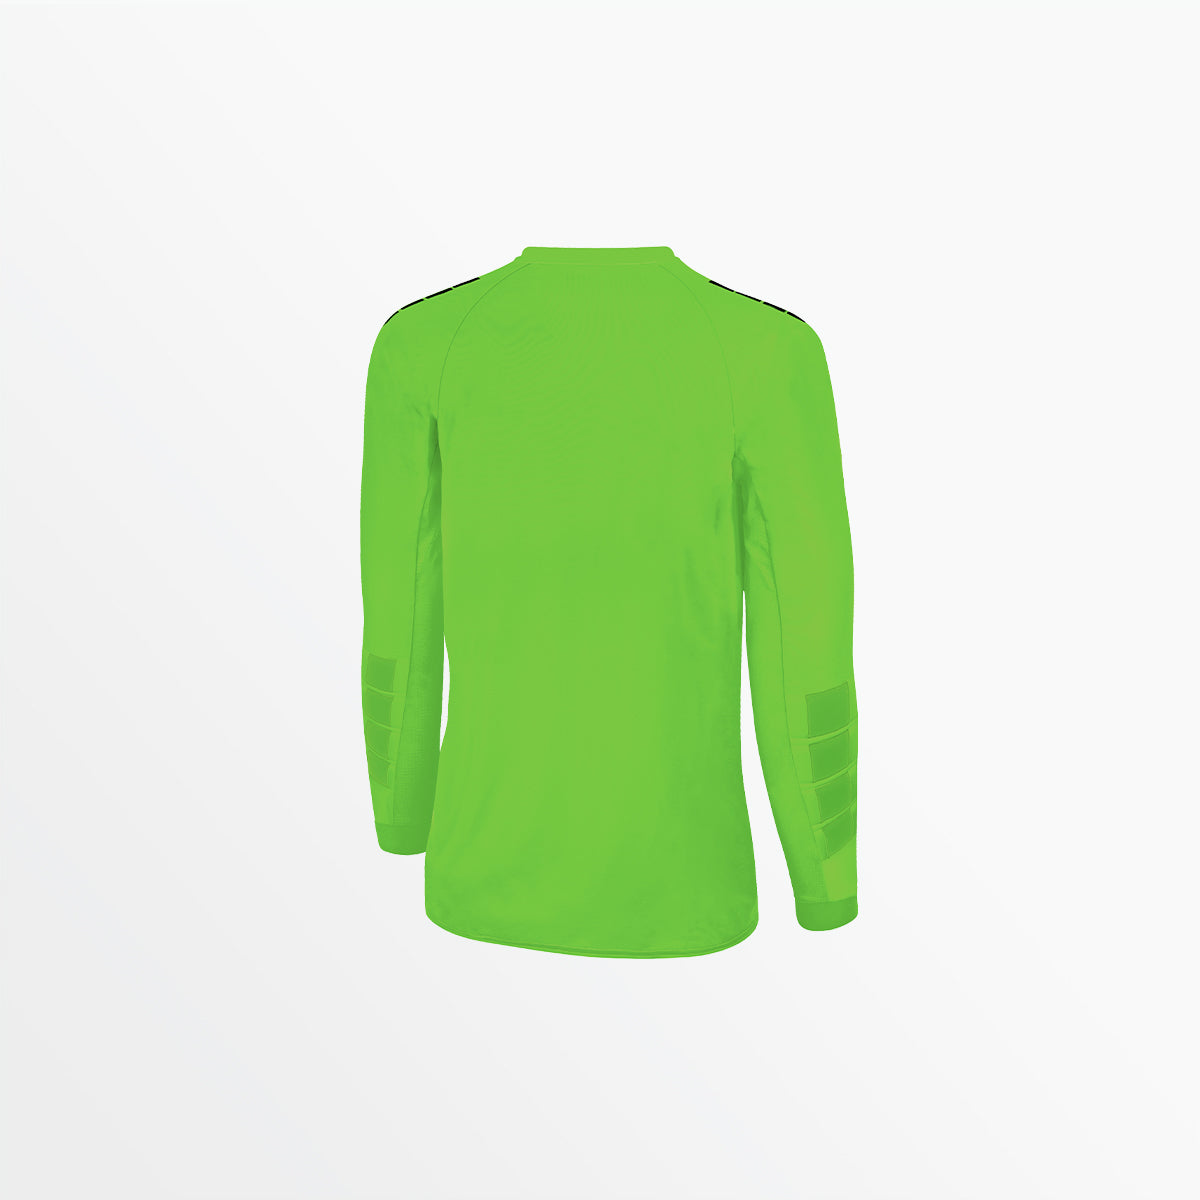 Marseille Blank Green Goalkeeper Long Sleeves Soccer Club Jersey